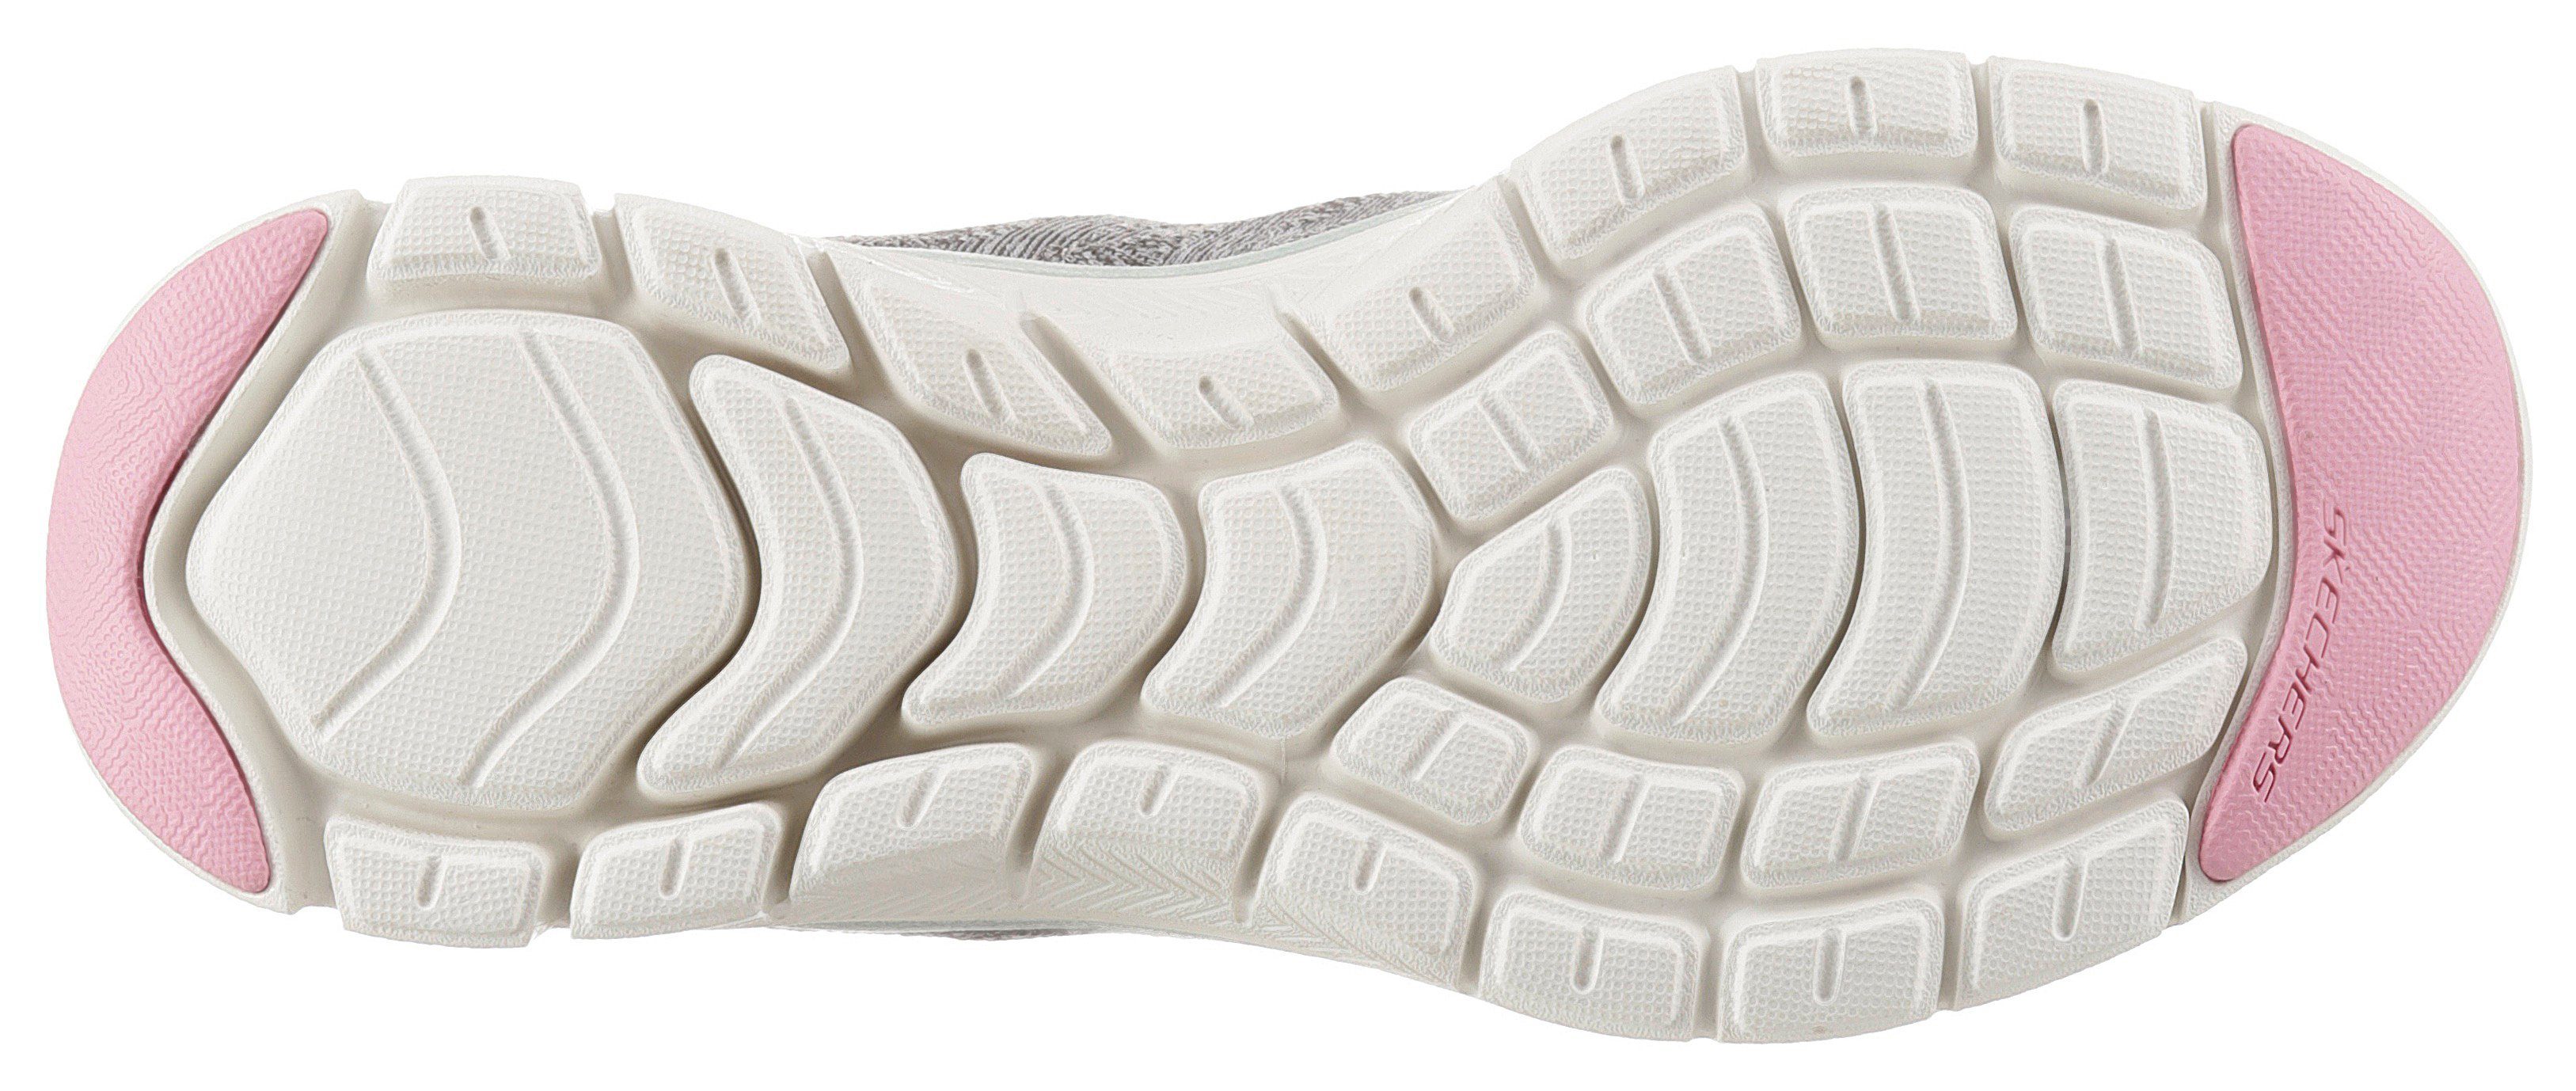 Foam MOVE Memory APEEAL 4.0 Cooled mit Air grau-mint FLEX FRESH Sneaker Skechers